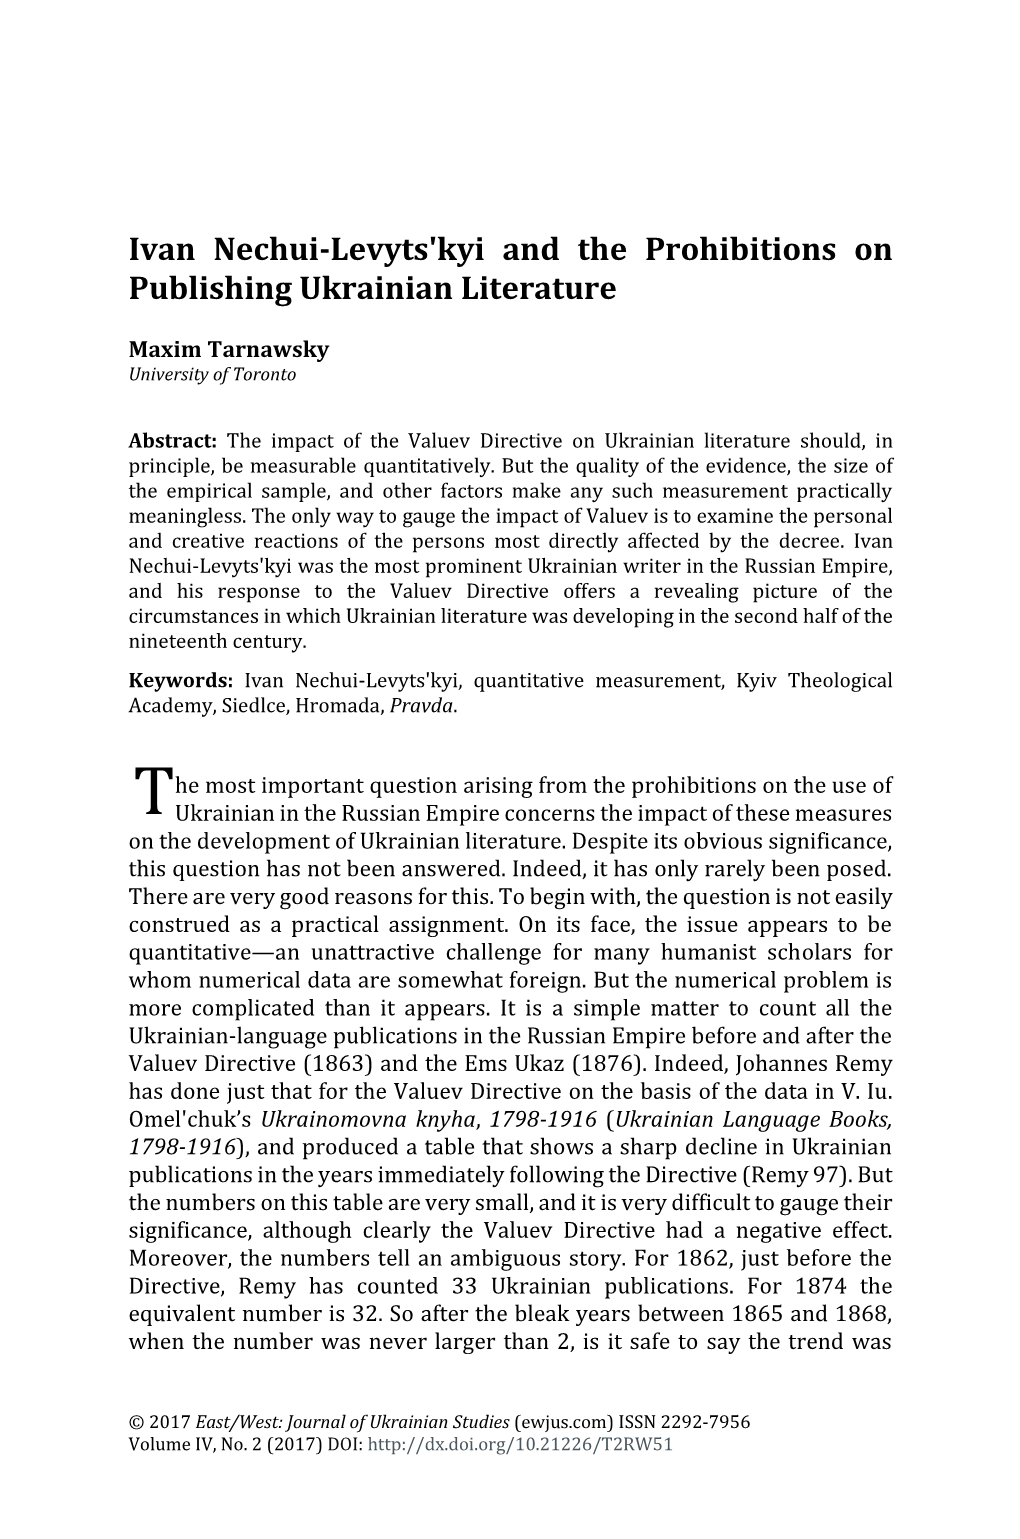 Ivan Nechui-Levyts'kyi and the Prohibitions on Publishing Ukrainian Literature